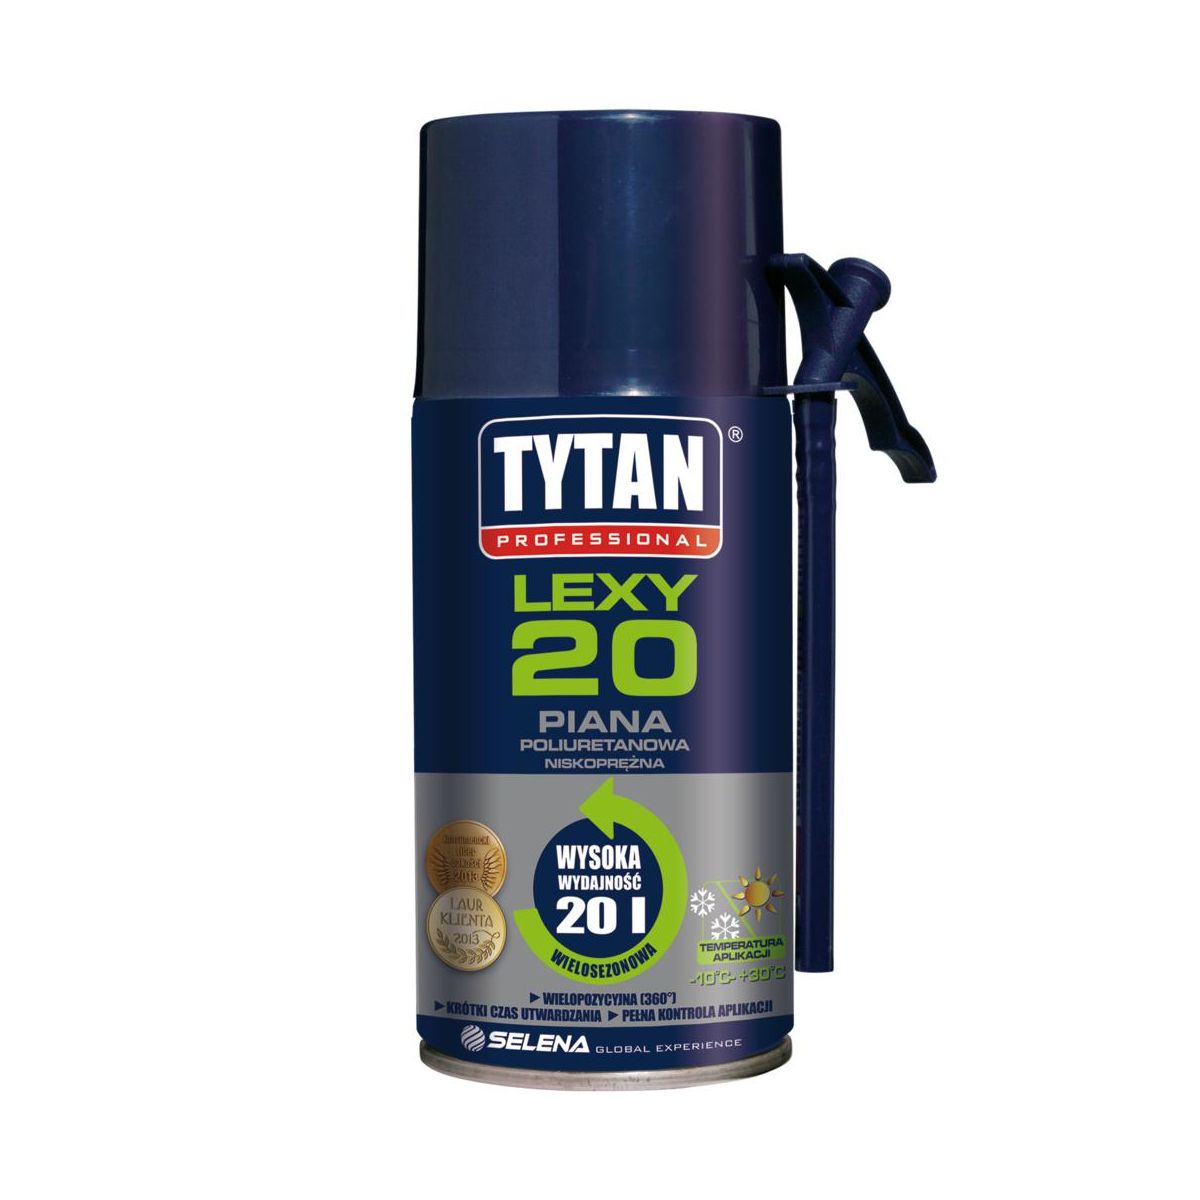 Thermosystem adhesives - LEXY Mounting Foam 20 Tytan Professional 300ml, https:maxbau.ro